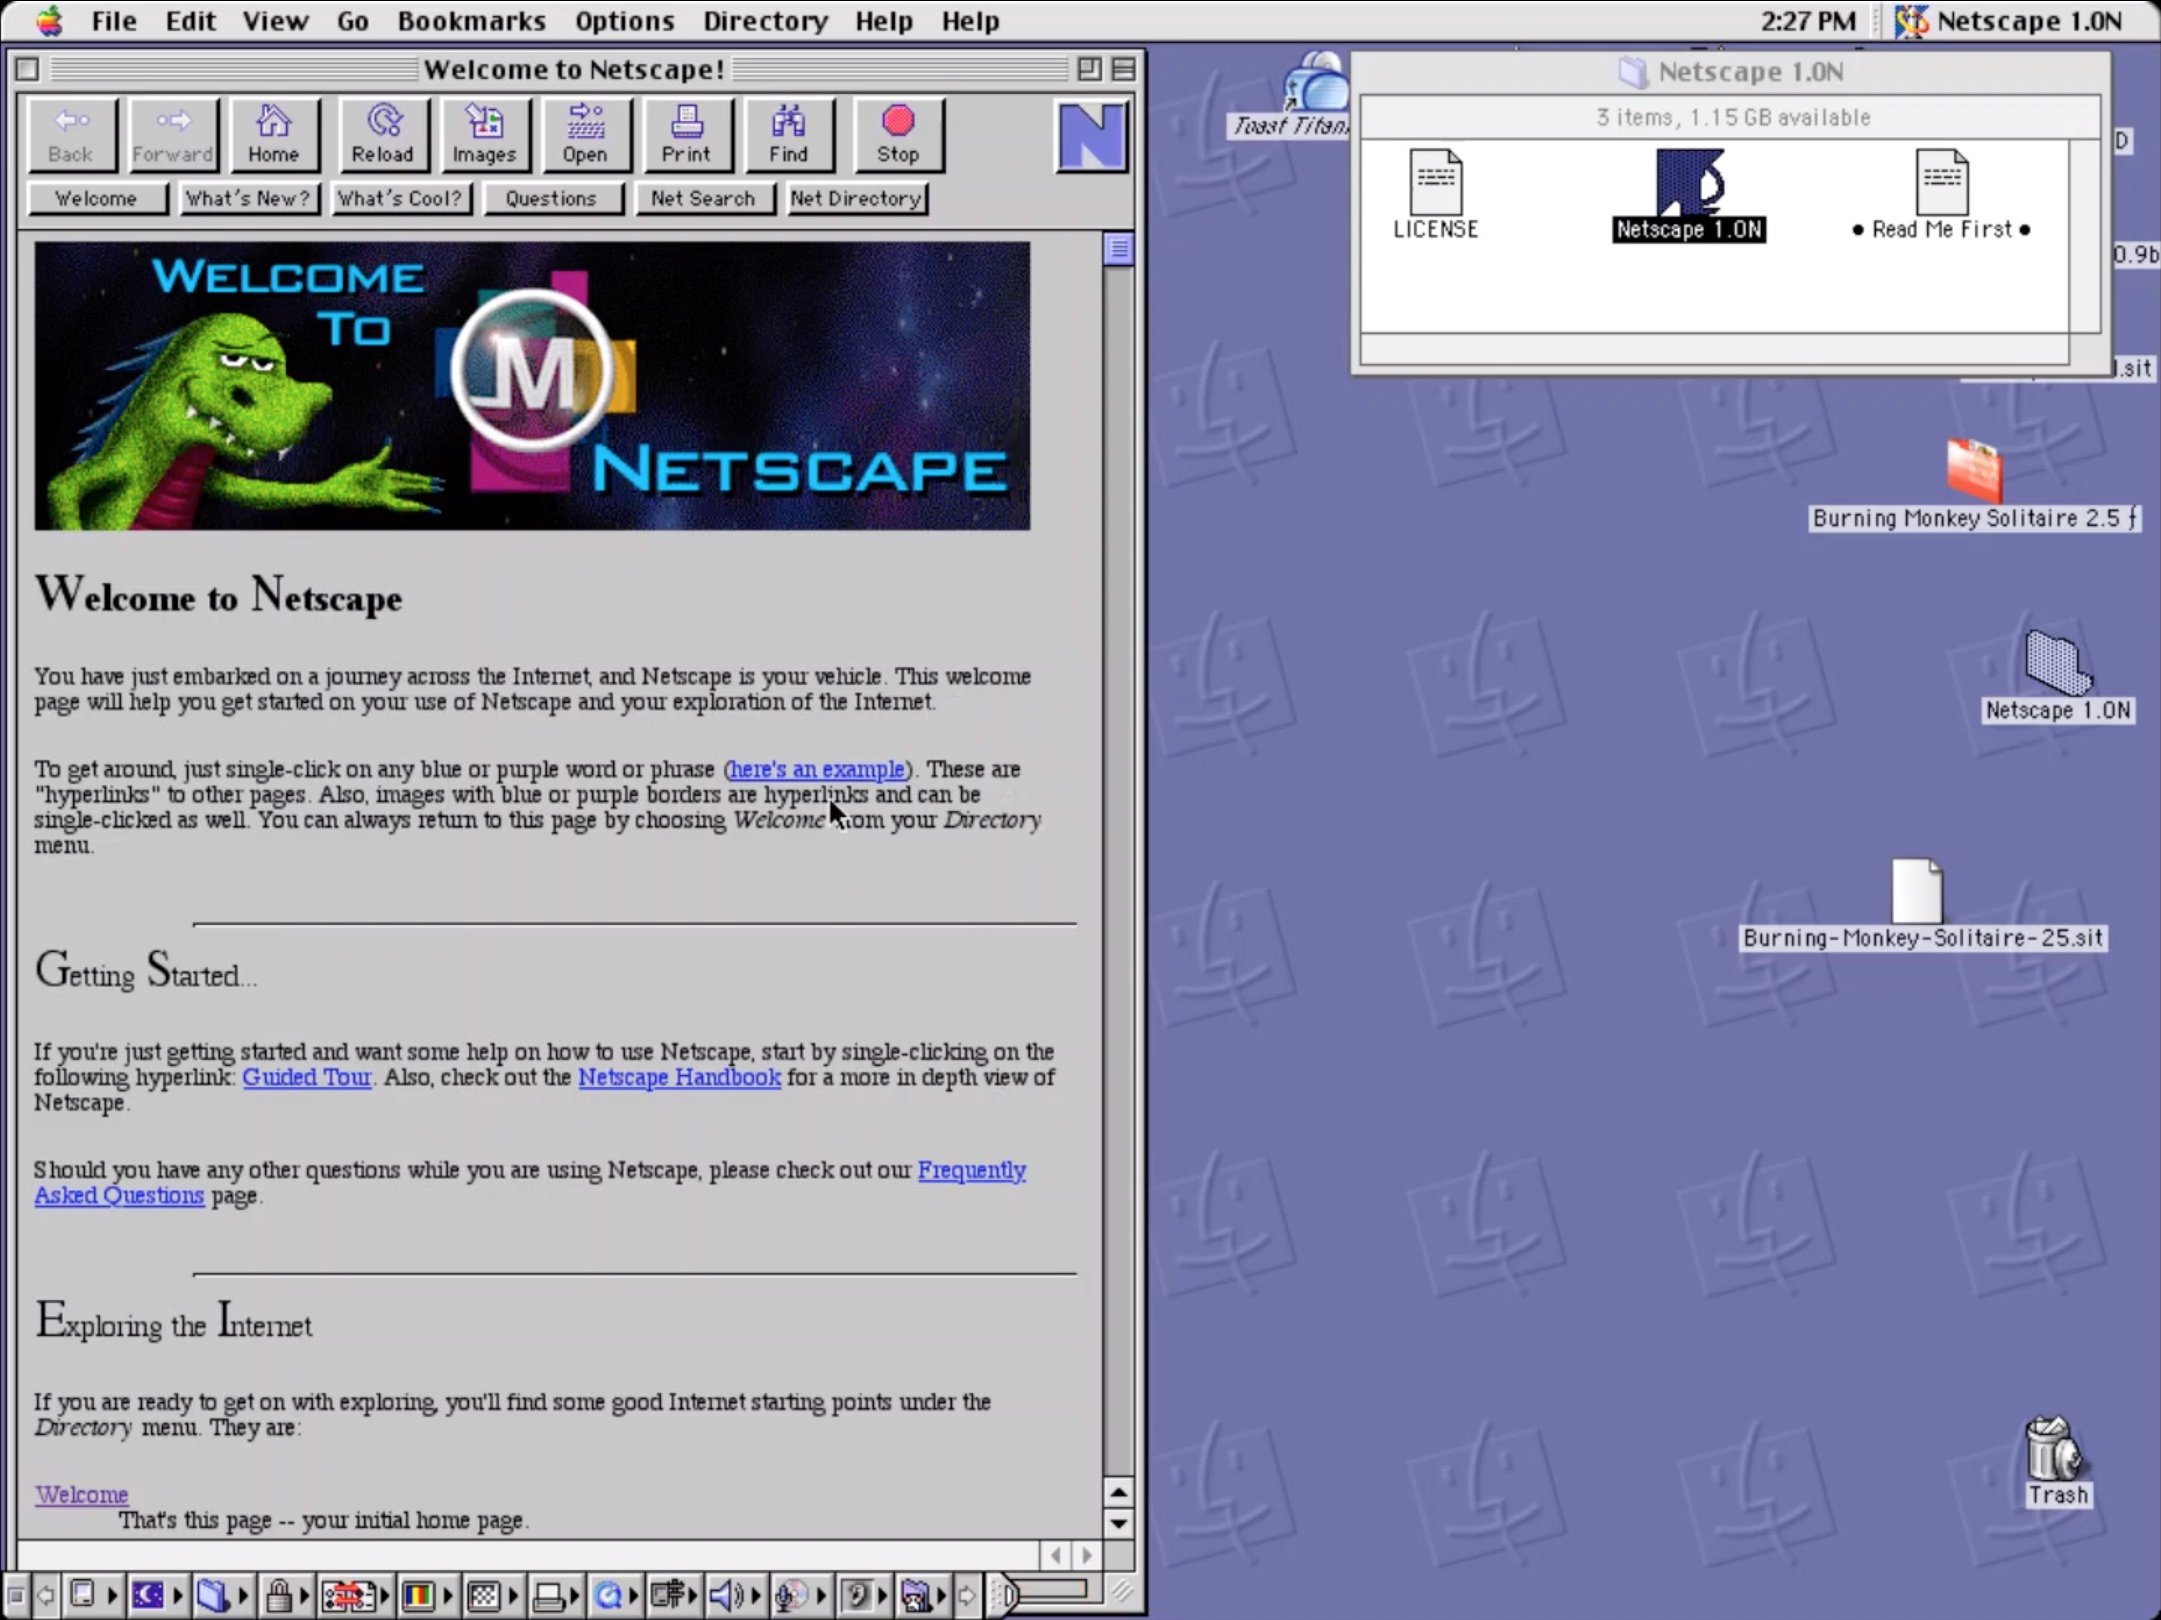 Netscape Navigator 1.0N Browser for Mac (1994)